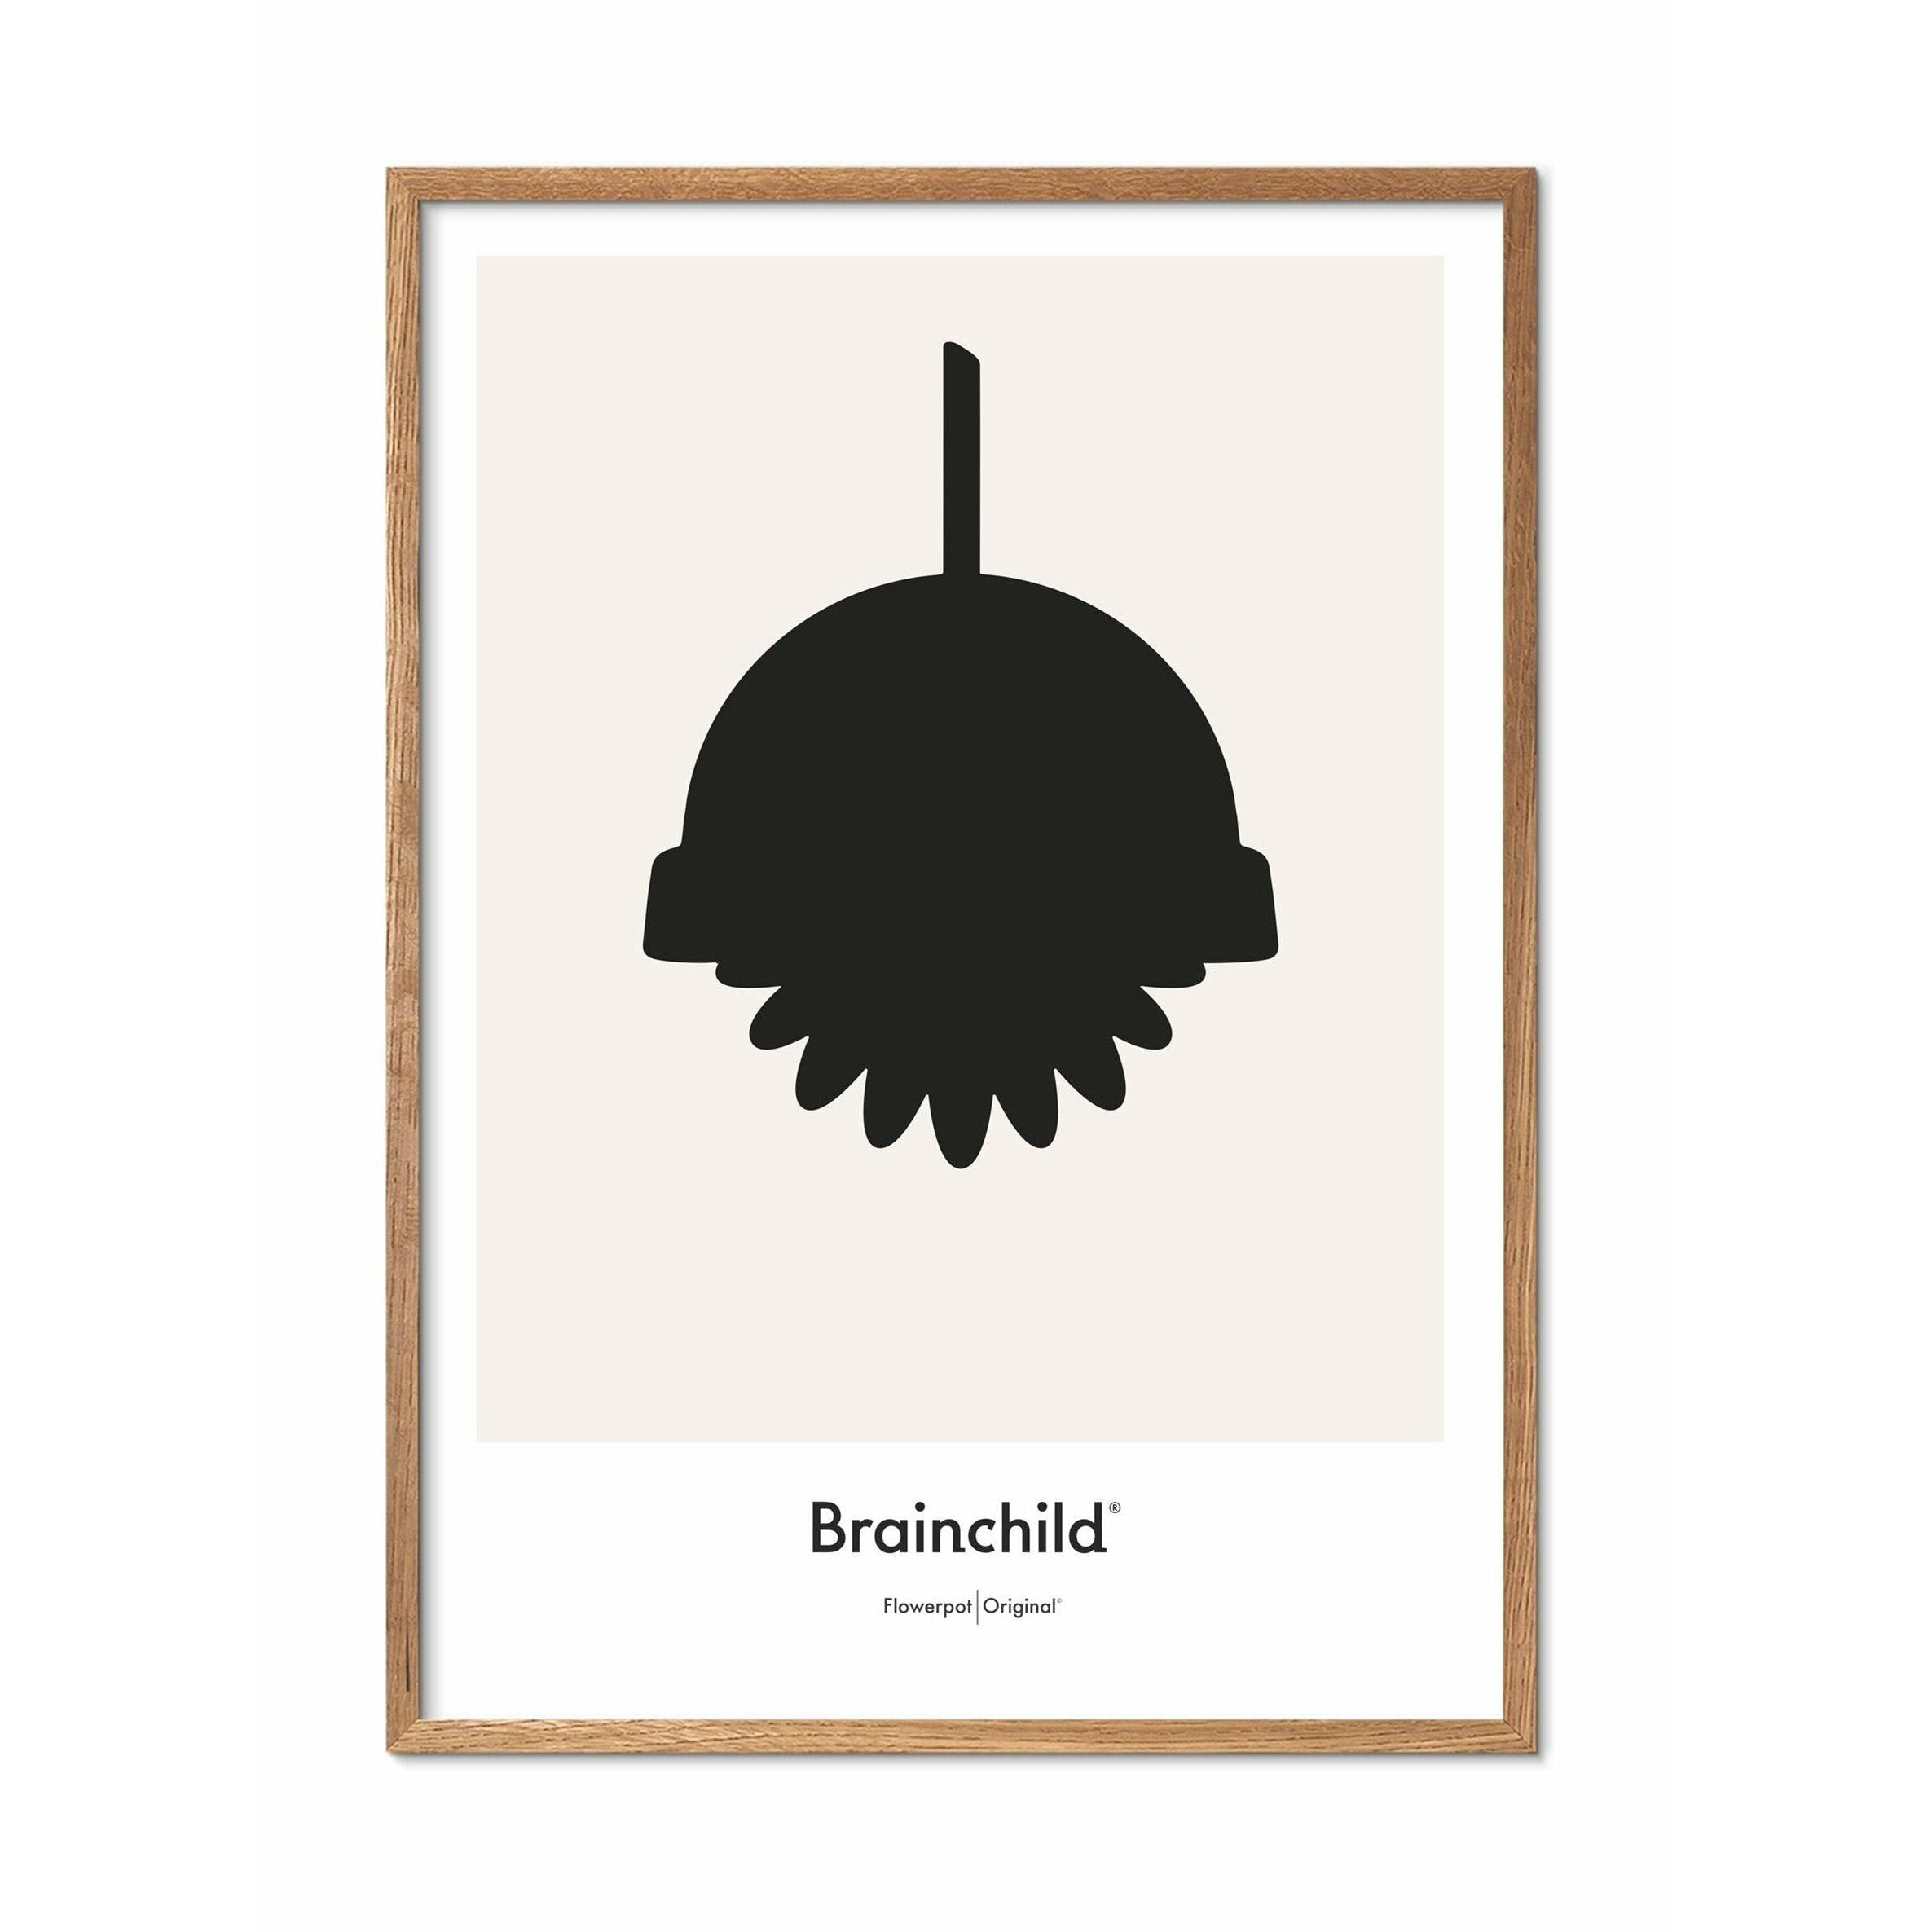 Brainchild Flowerpot Designikon Plakat, Ramme I Lyst Træ 30X40 Cm, Grå